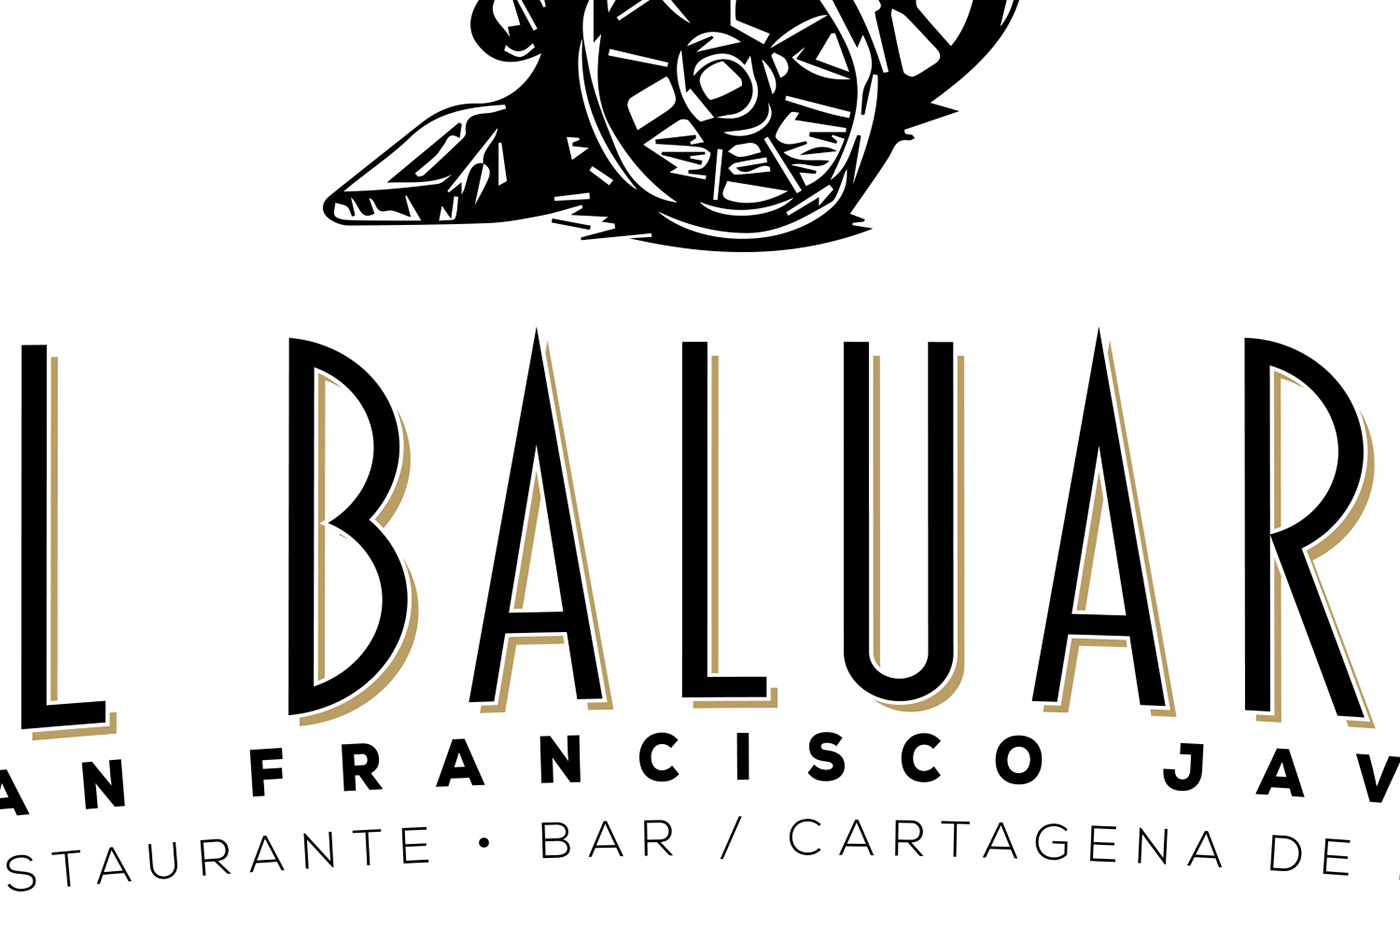 Baluarte Cartagena colombia bar restaurante restaurant logo